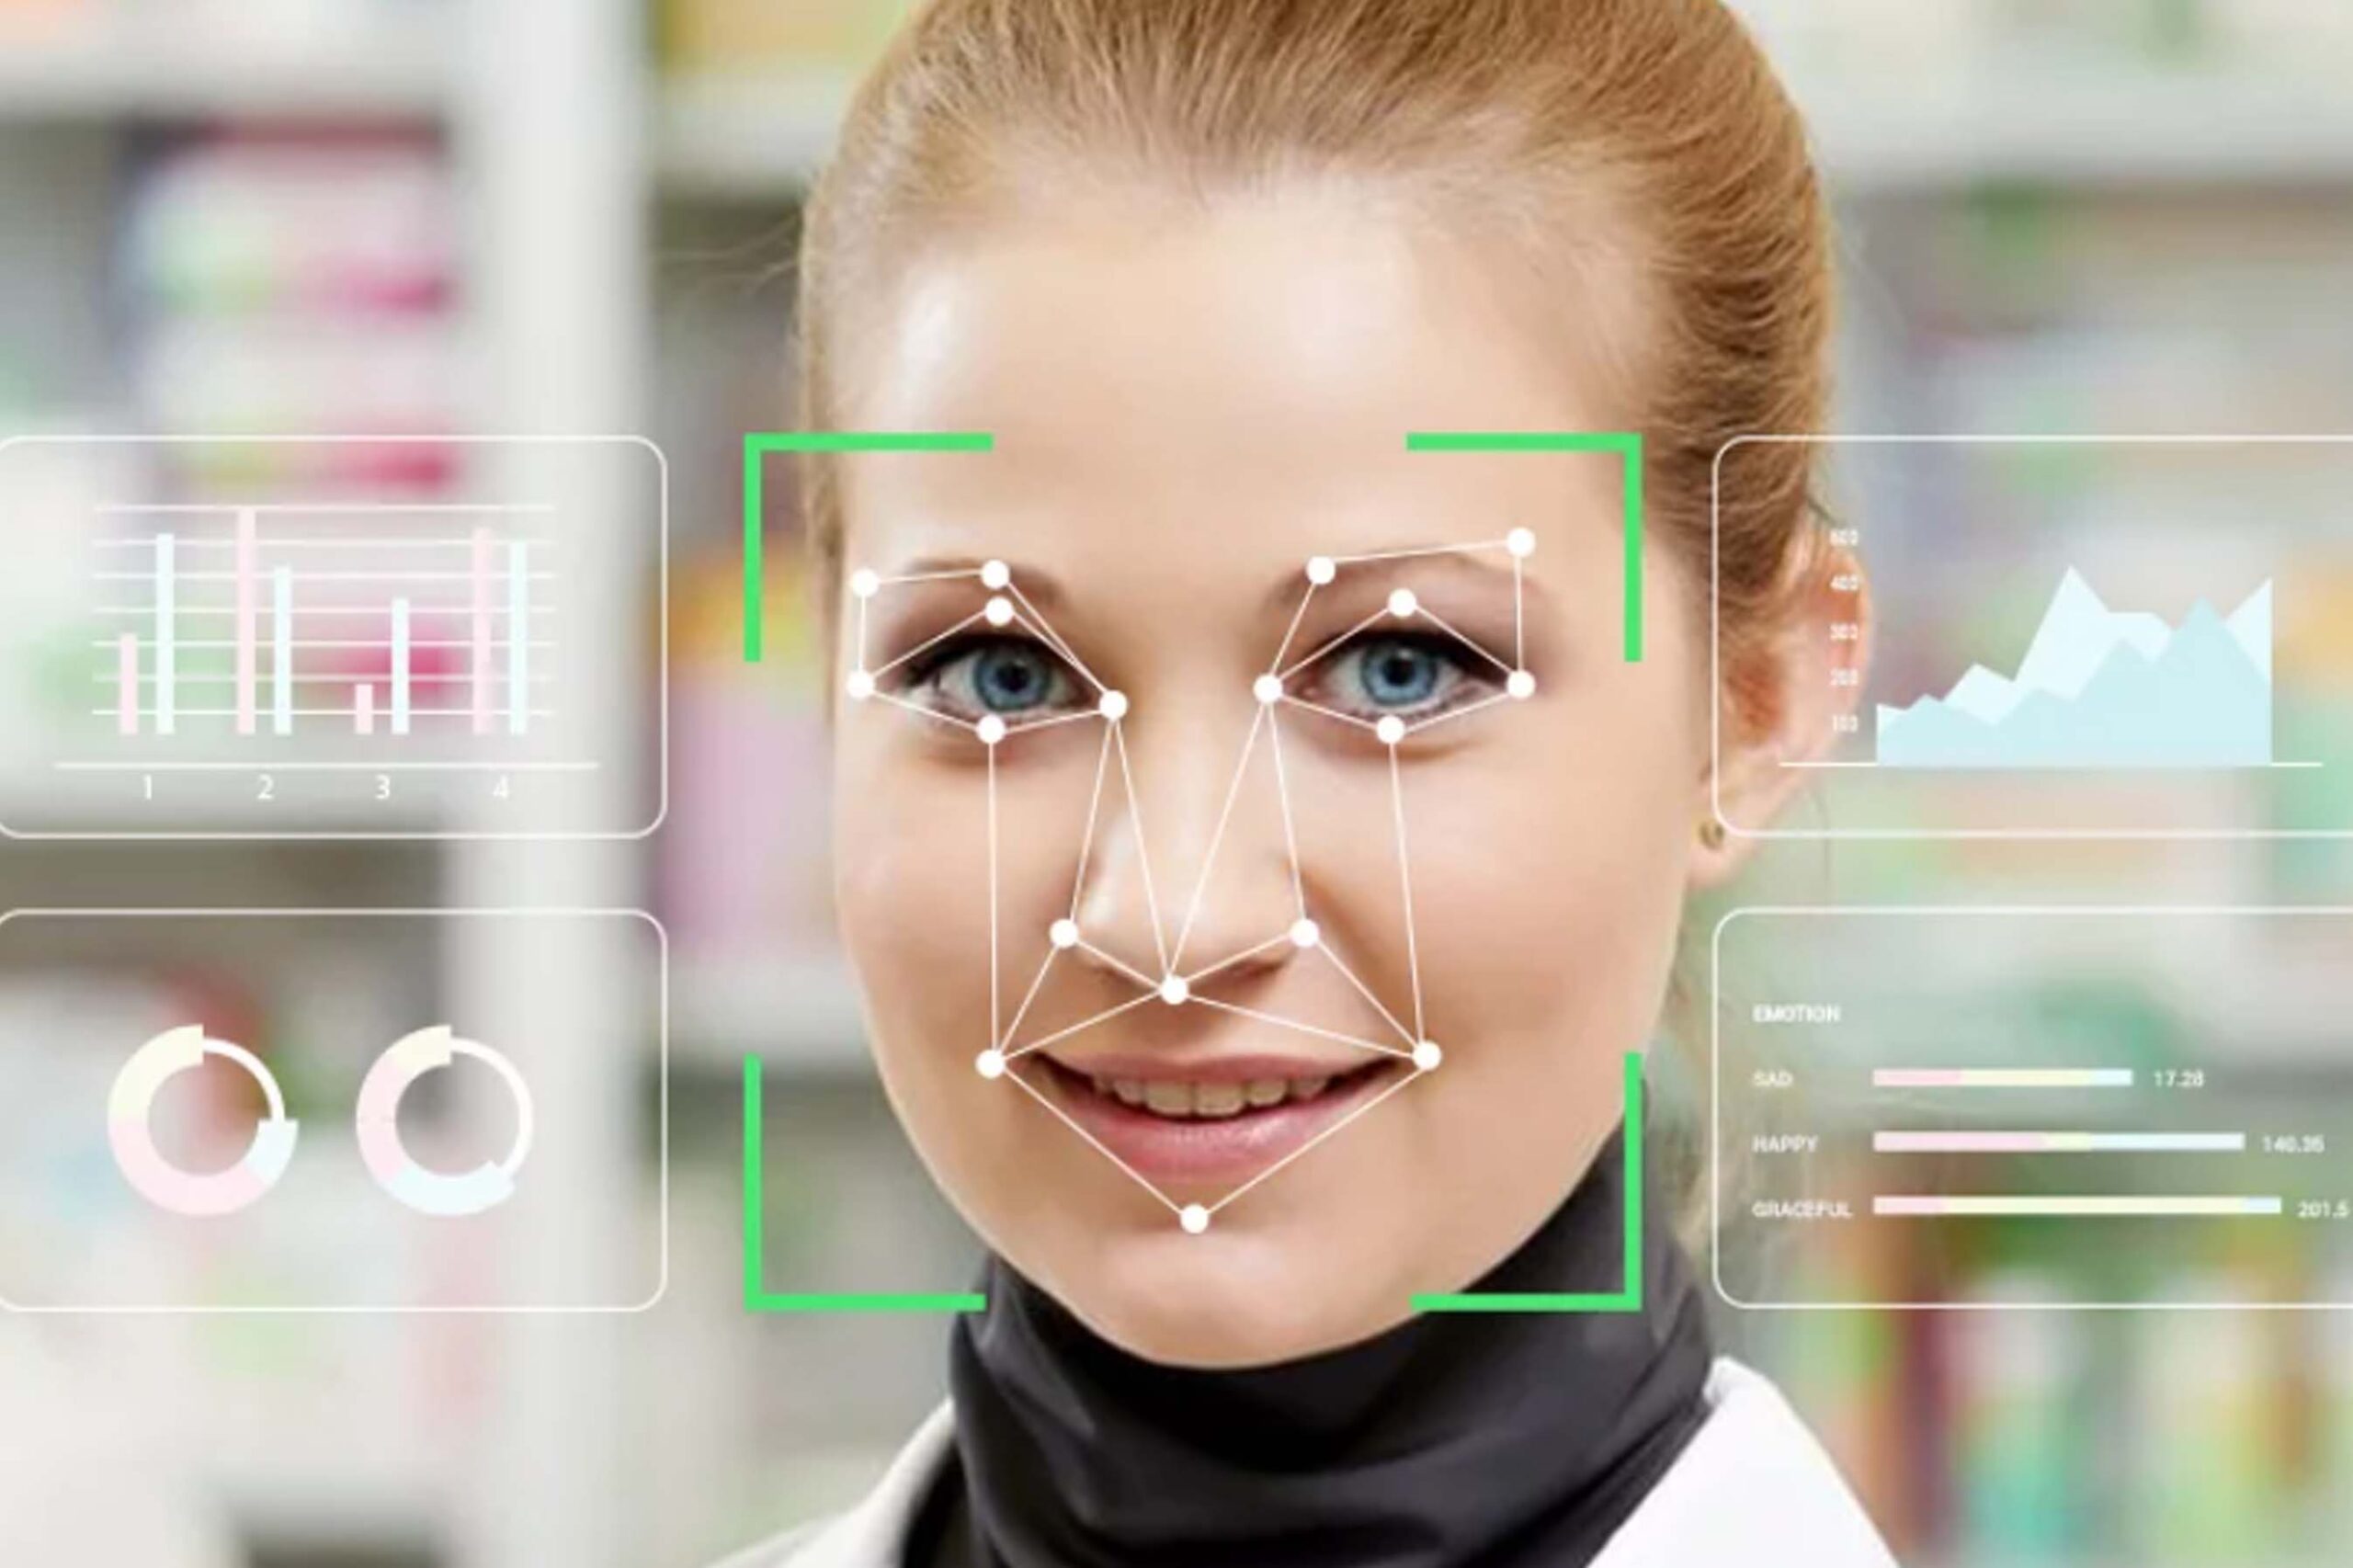 Global face. Биометрическая идентификация. Face recognition. 6. Сетевая идентификация. Facial recognition Camera on Wall illustration.